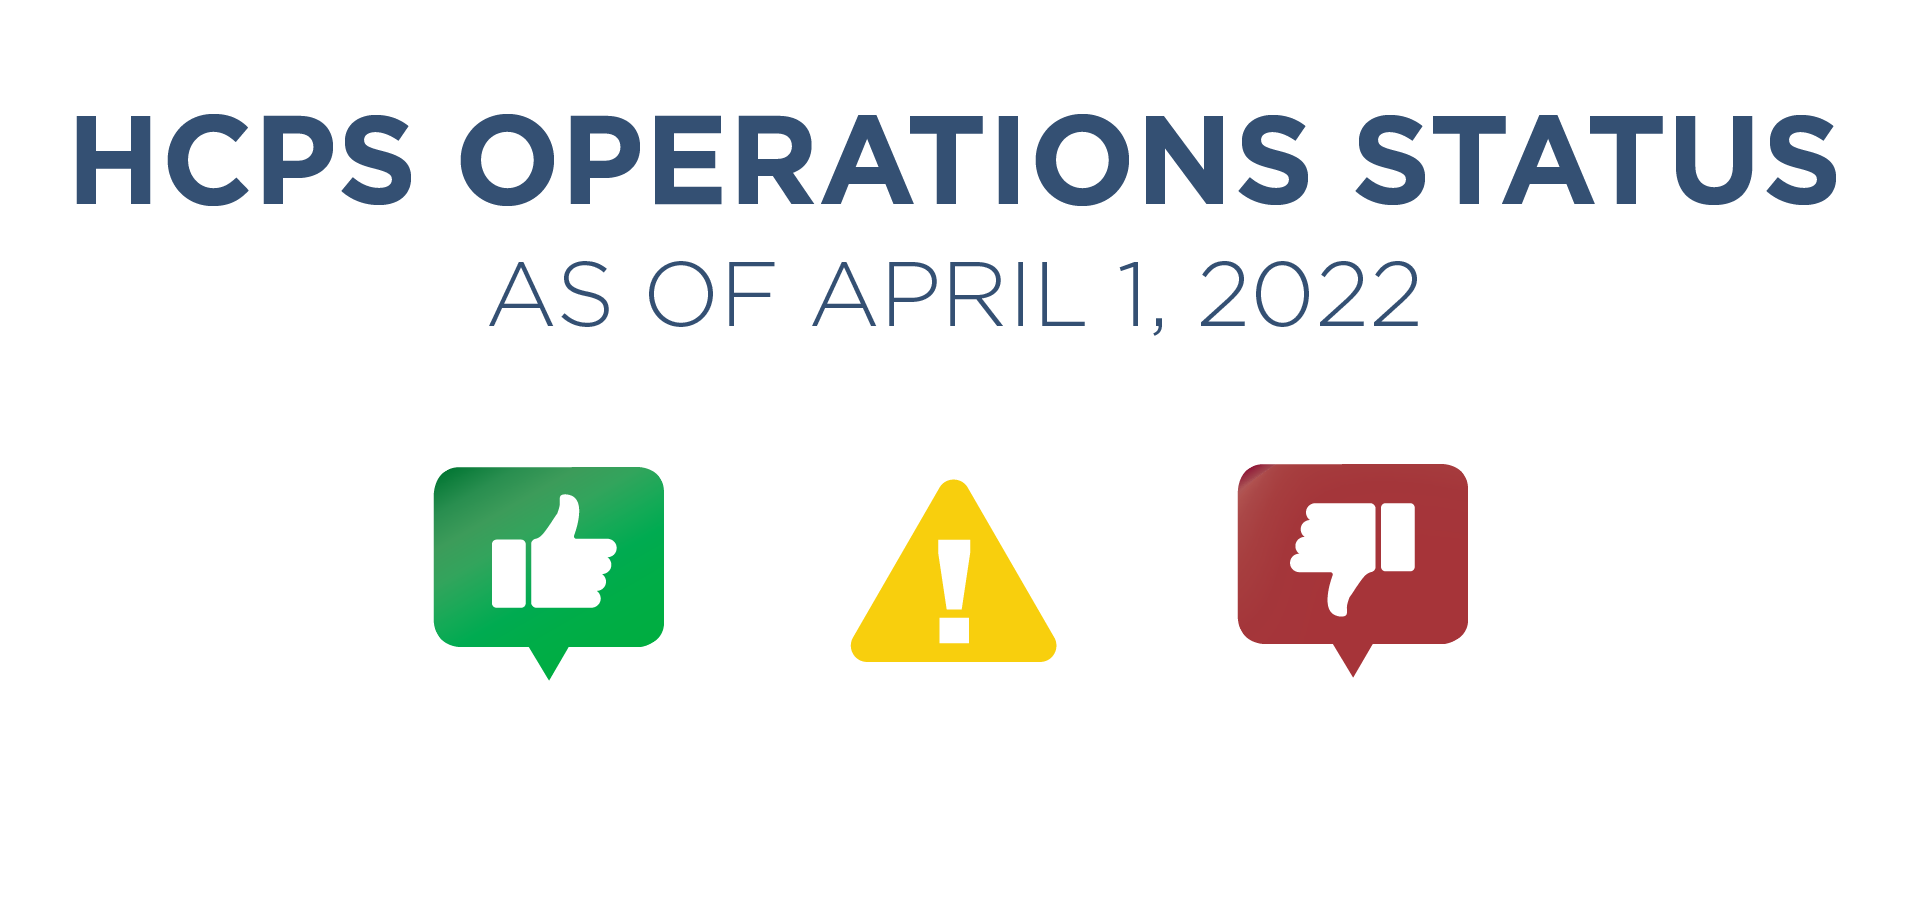 HCPS Operating Status as of April 1, 2022